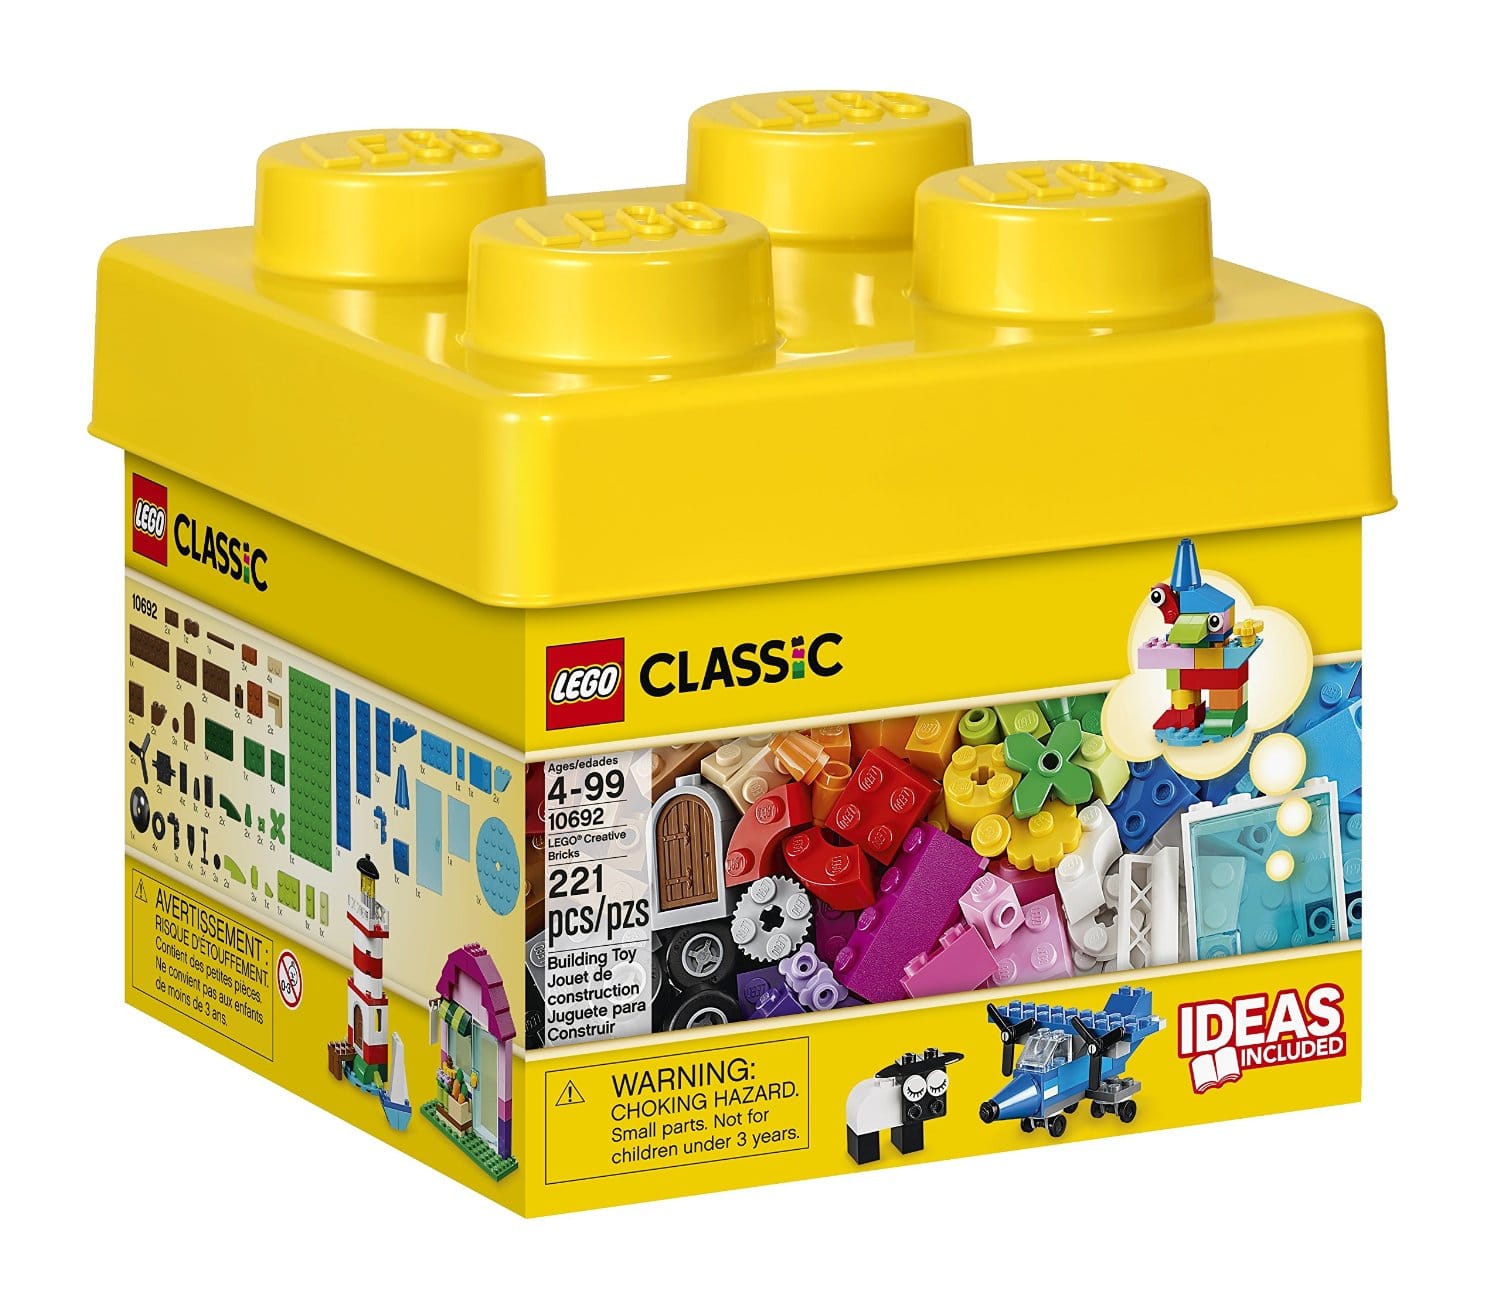 https://fun-squared.com/wp-content/uploads/2017/07/Lego.jpg